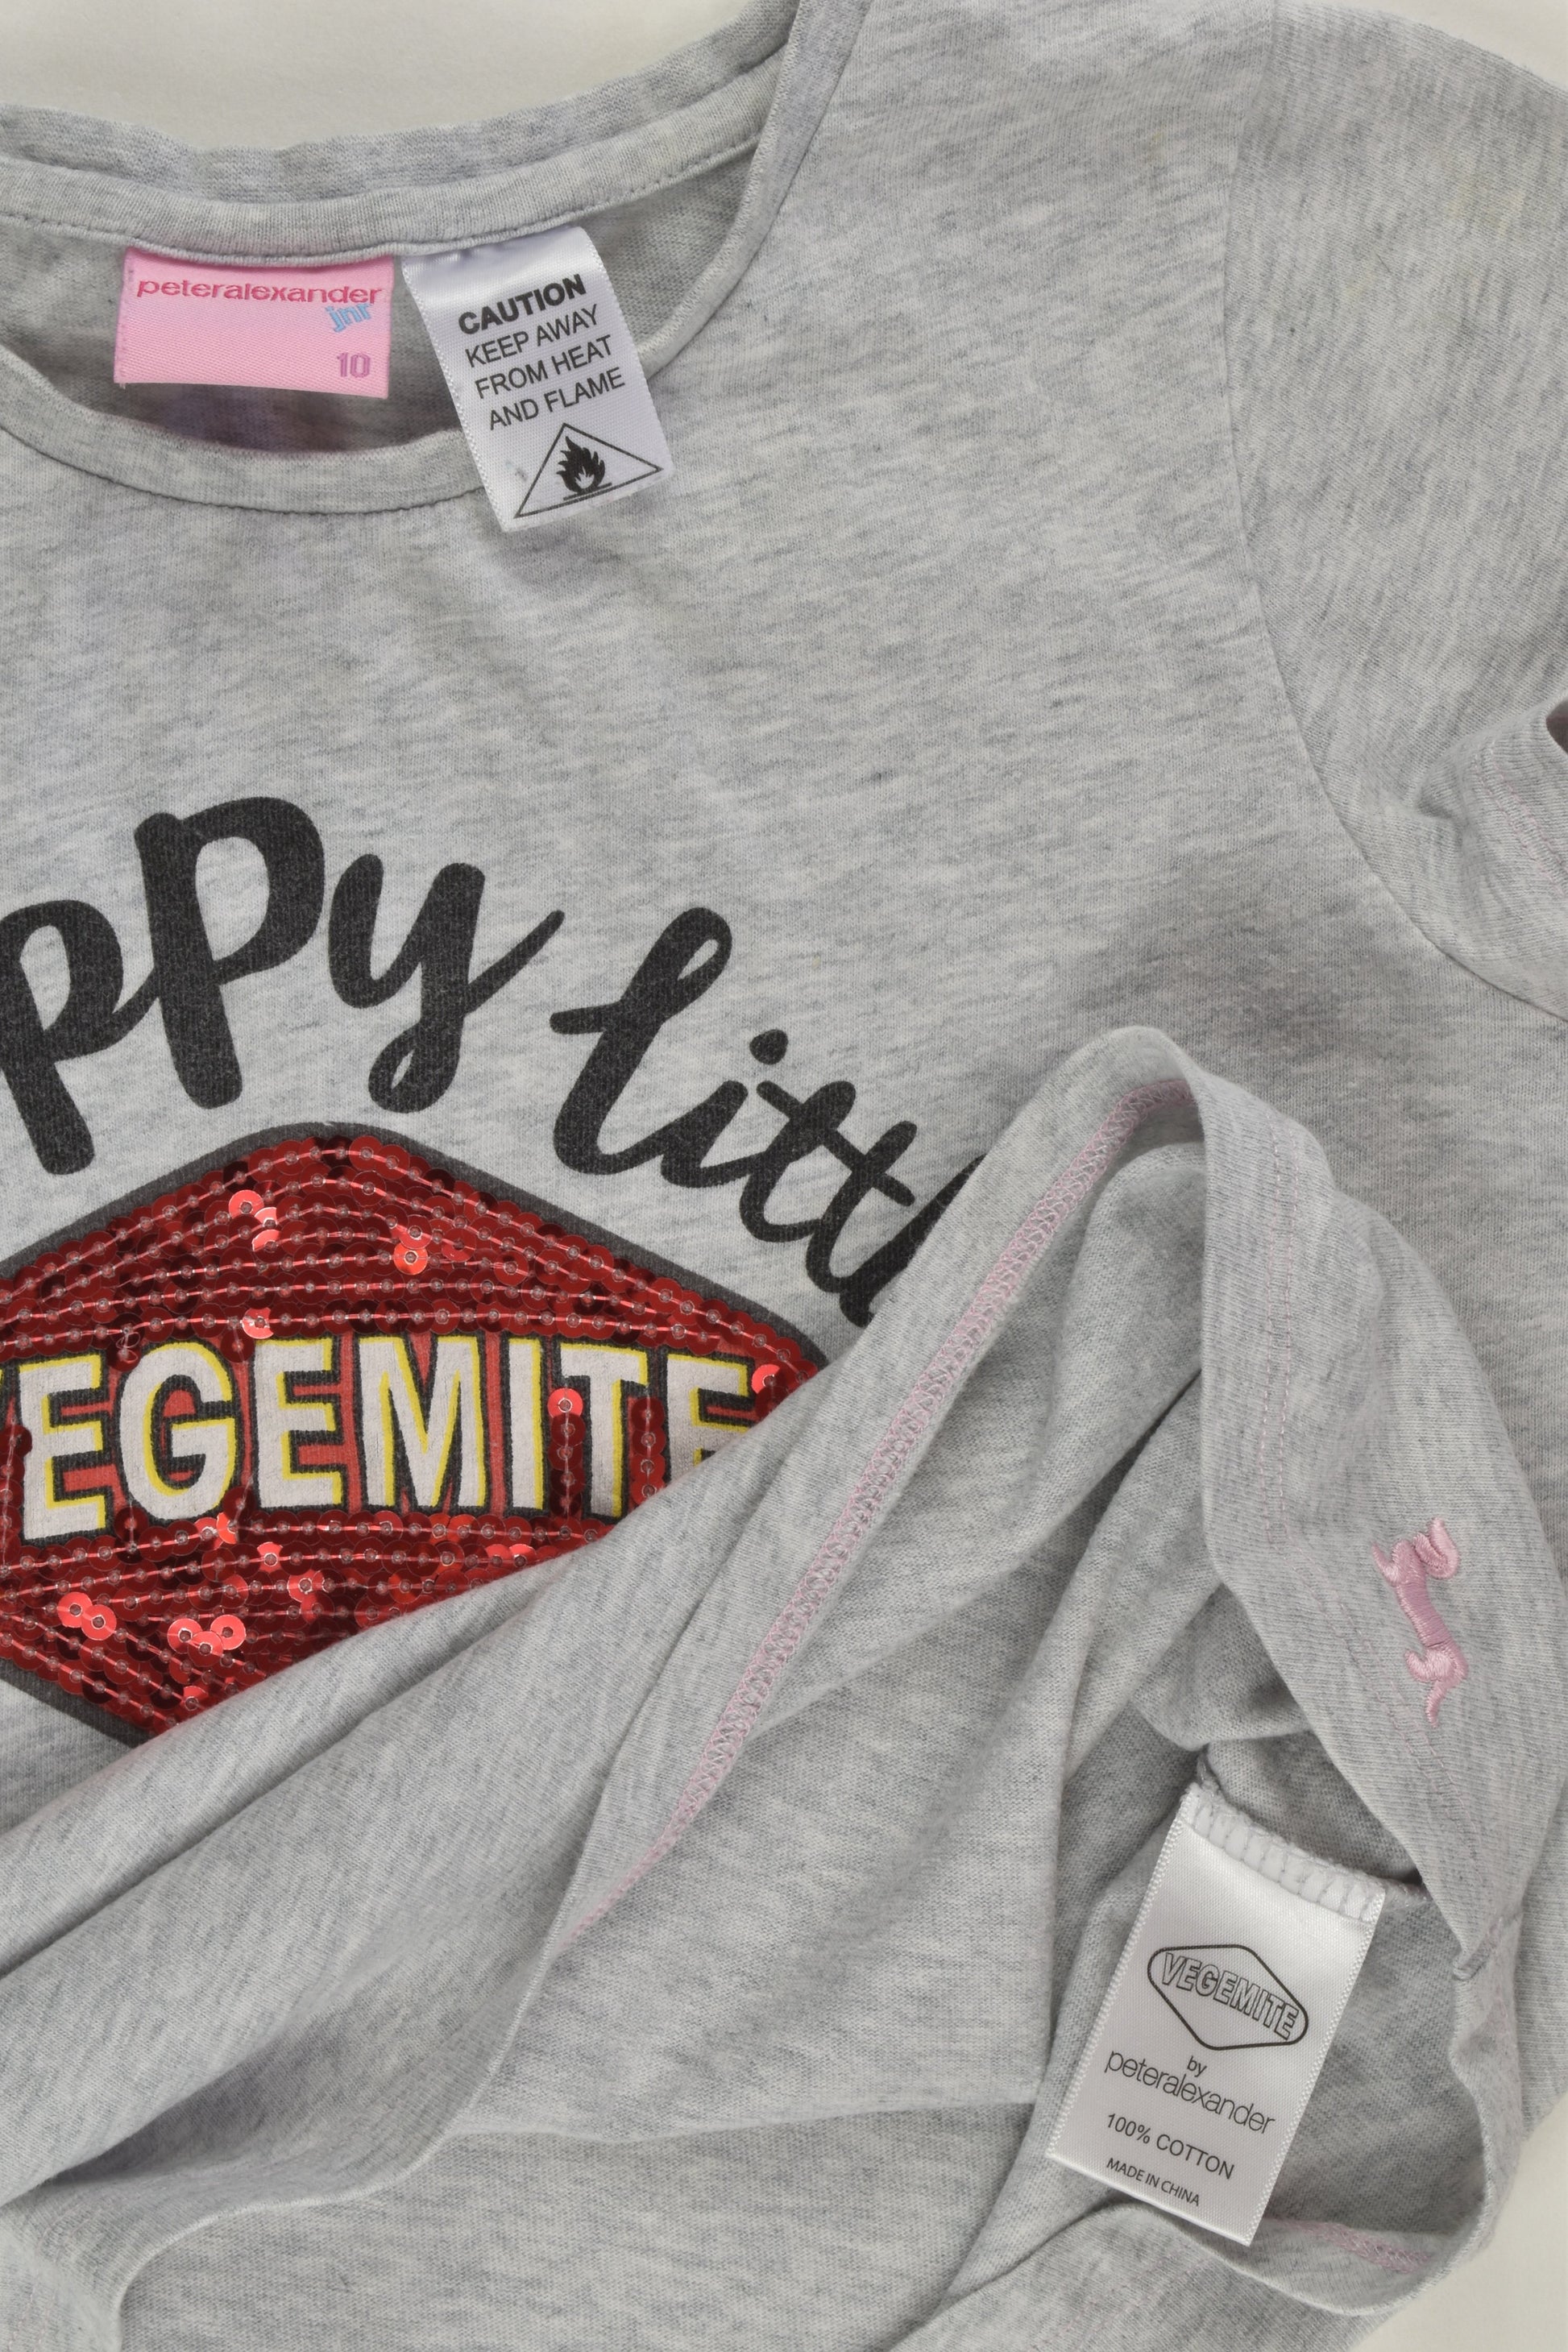 Peter Alexander Size 10 'Happy Little Vegemite' T-shirt